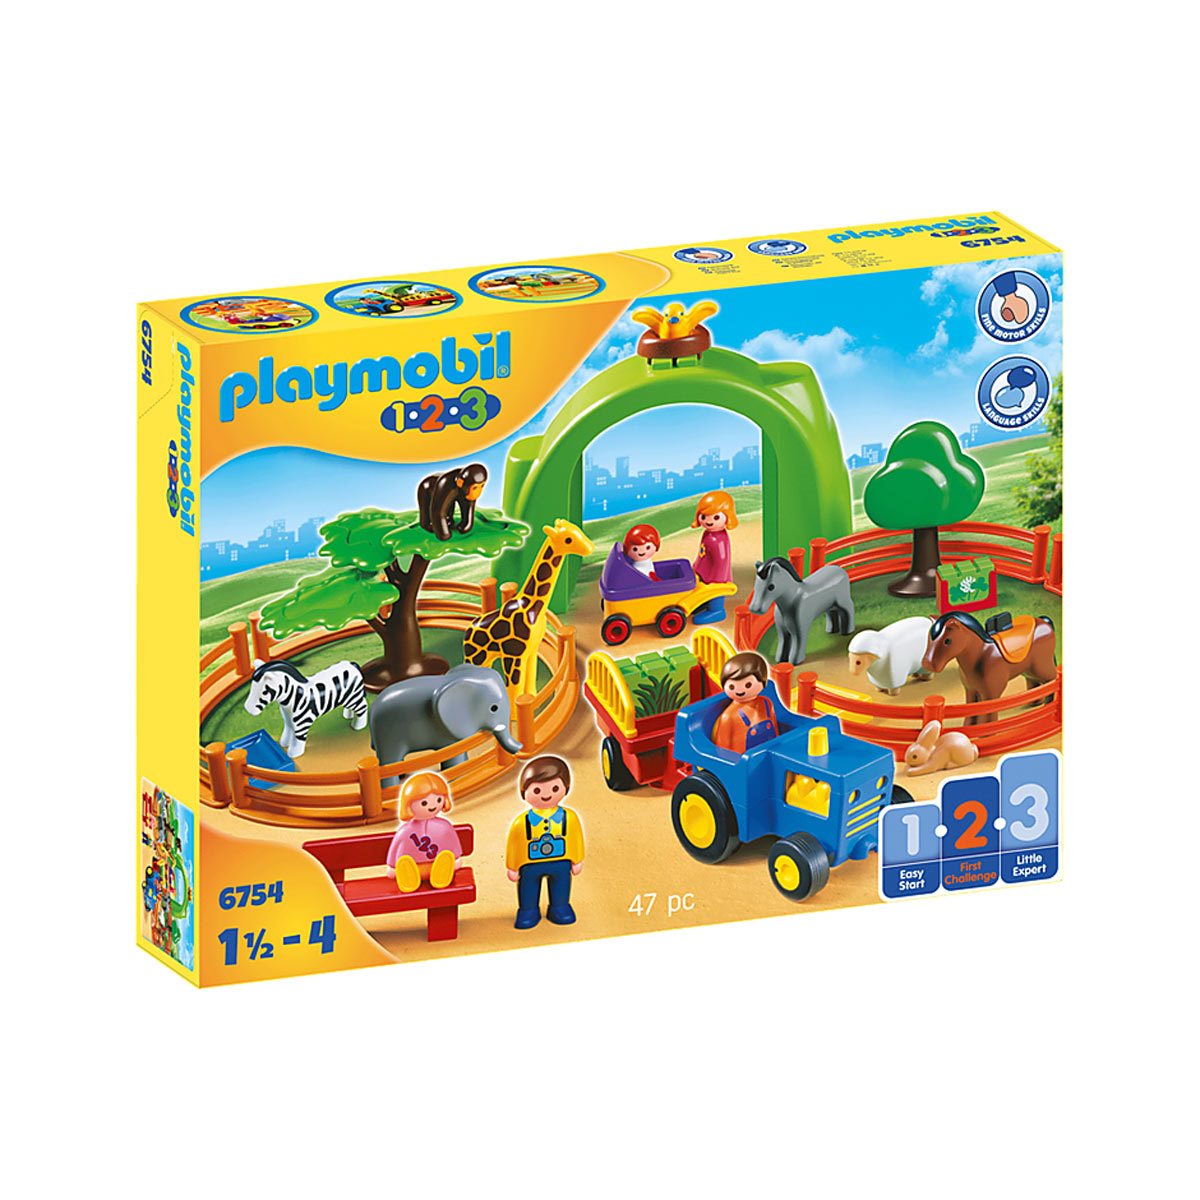 Grand zoo Playmobil 123 - Playmobil